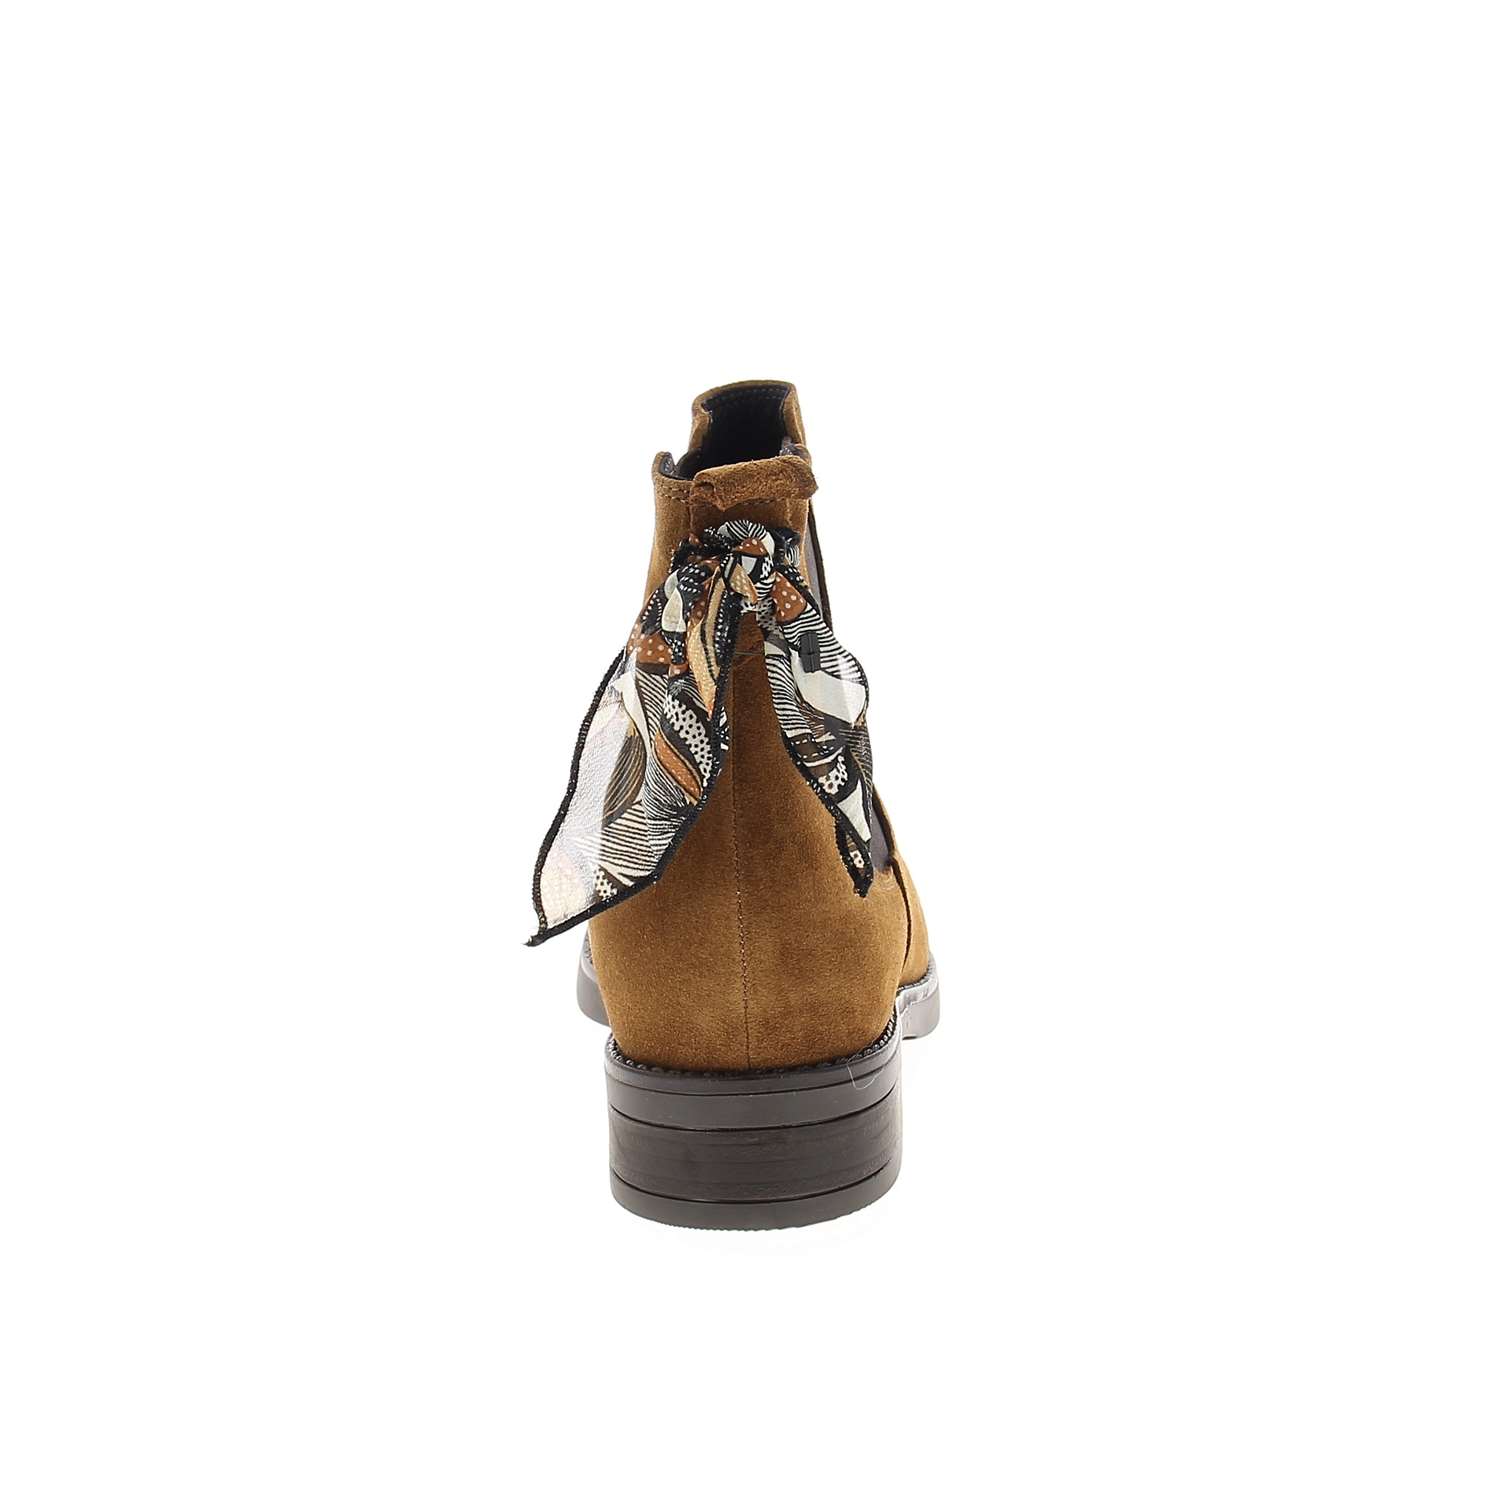 04 - GOMMY - GOODSTEP - Boots et bottines - Croûte de cuir